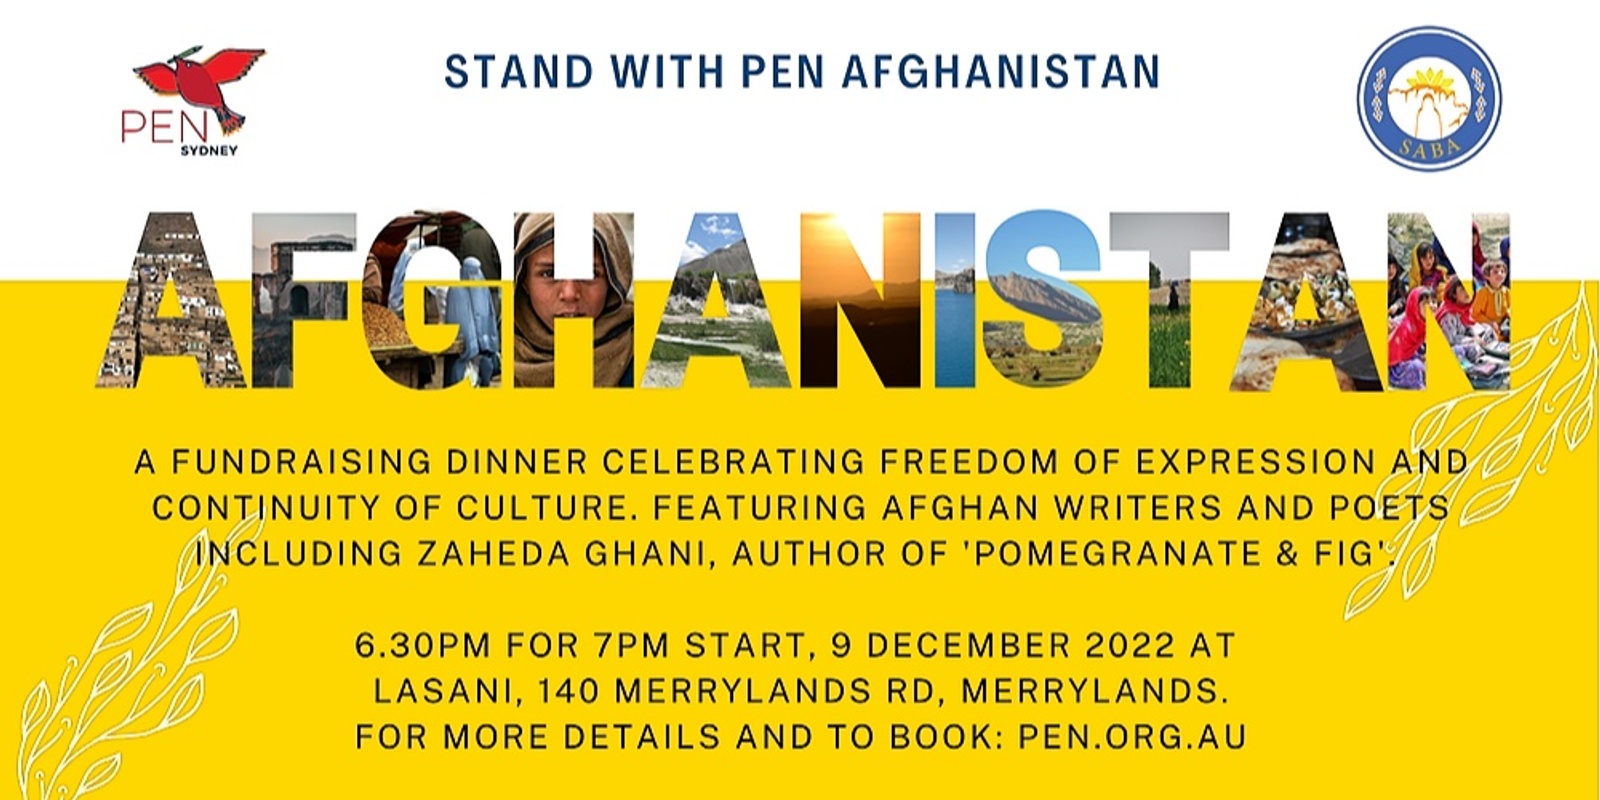 Banner image for Fundraising dinner for PEN International in support of Afghanistan